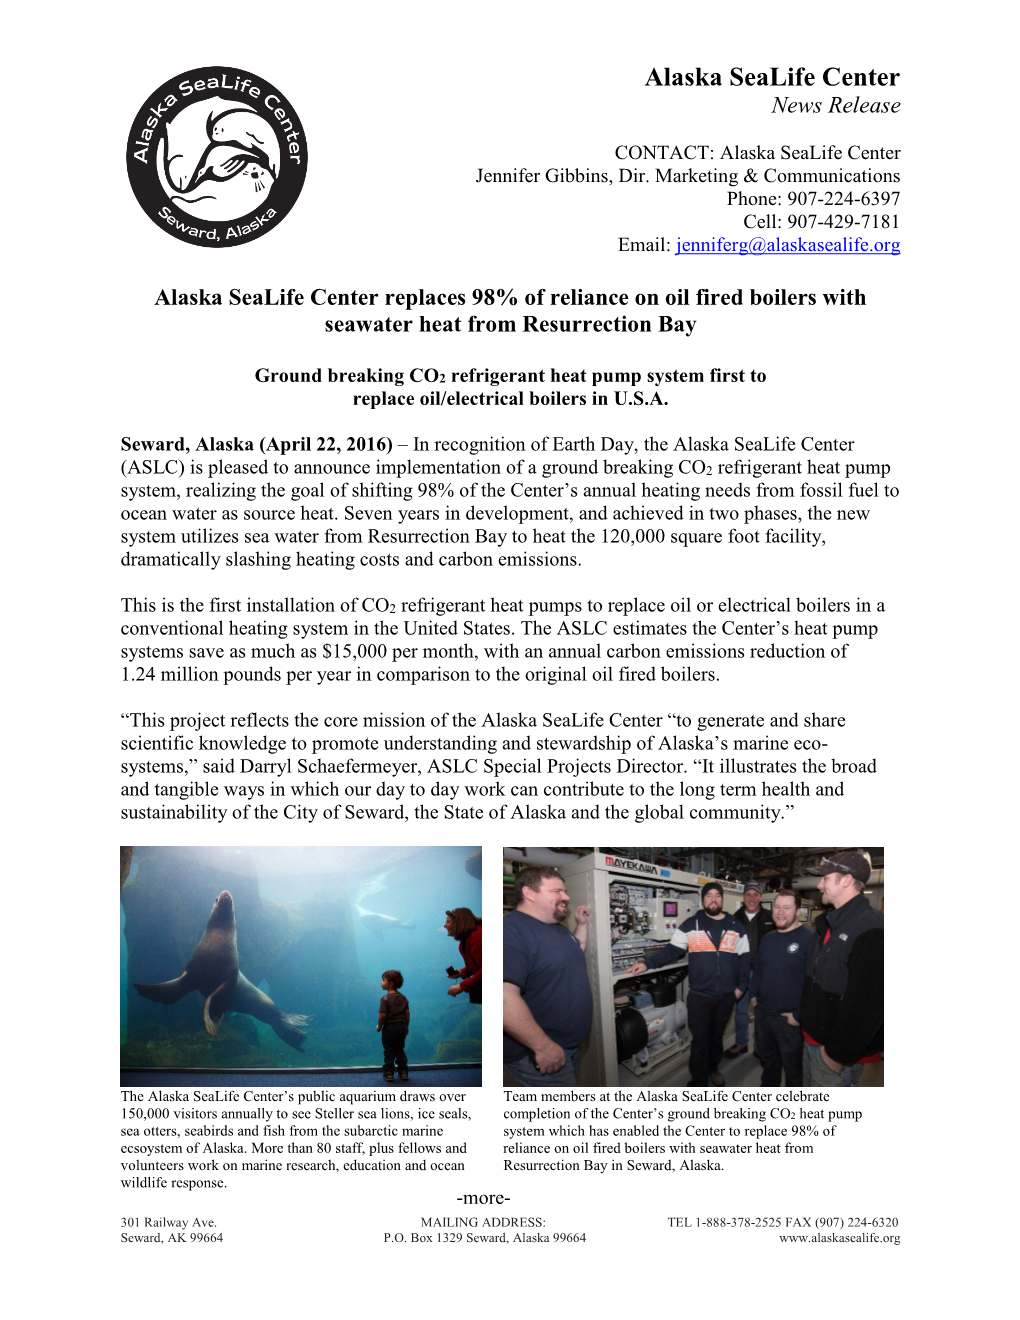 Alaska Sealife Center News Release